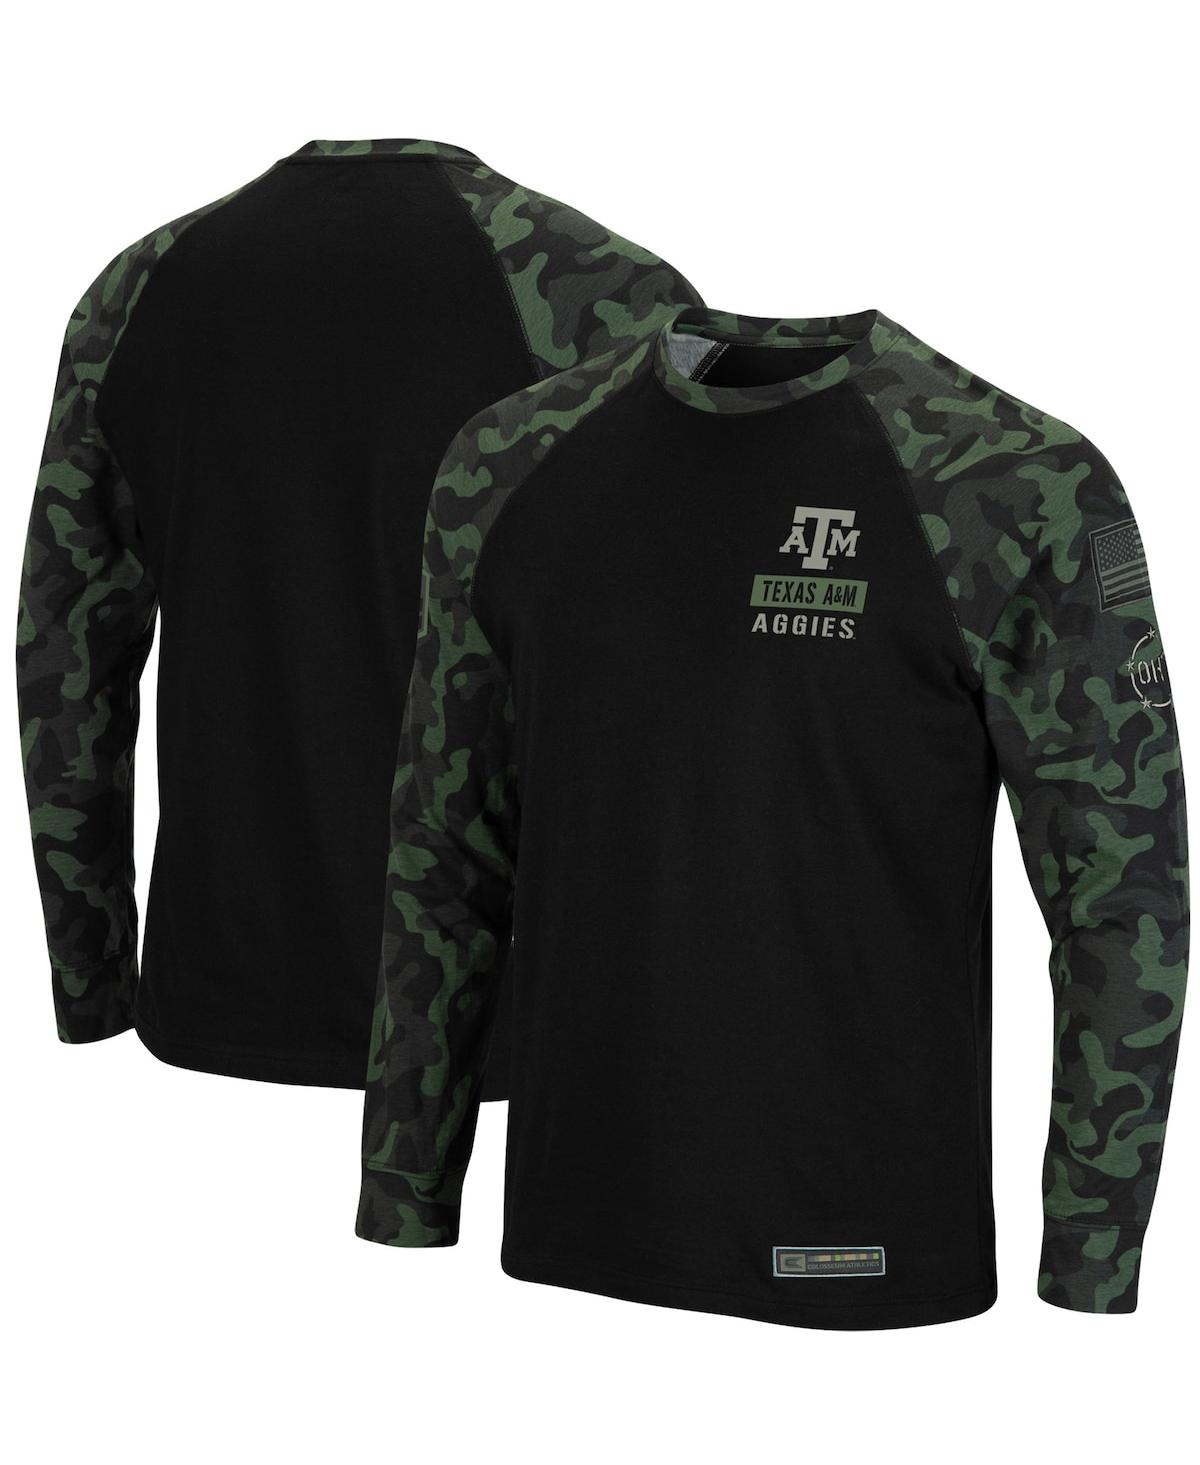 Men's Black Texas A&M Aggies Oht Military-Inspired Appreciation Camo Raglan Long Sleeve T-shirt - Black